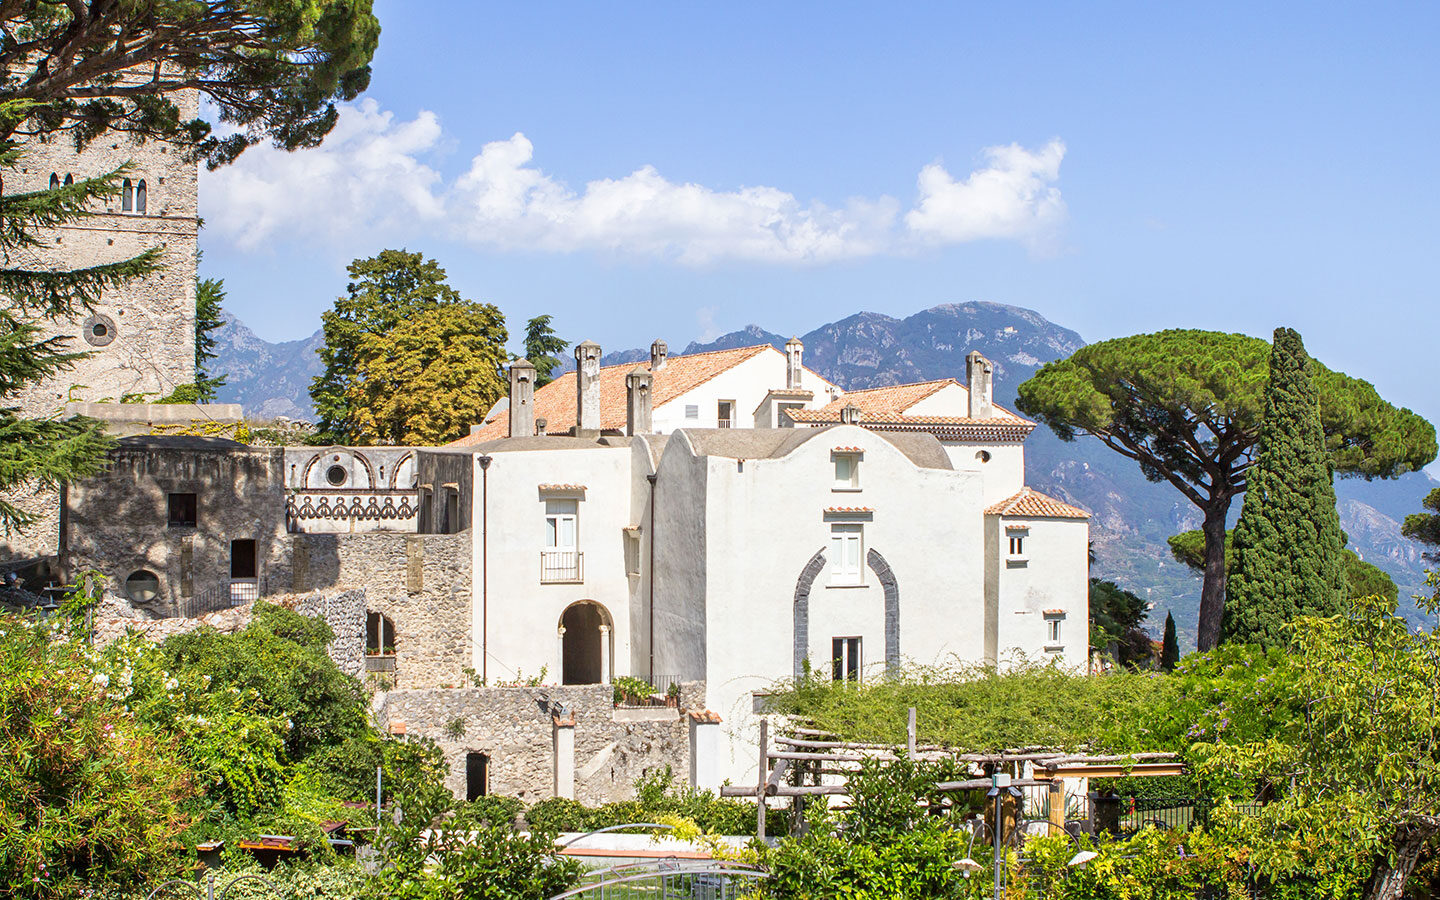 Villa Cimbrone gardens in Ravello, Amalfi Coast